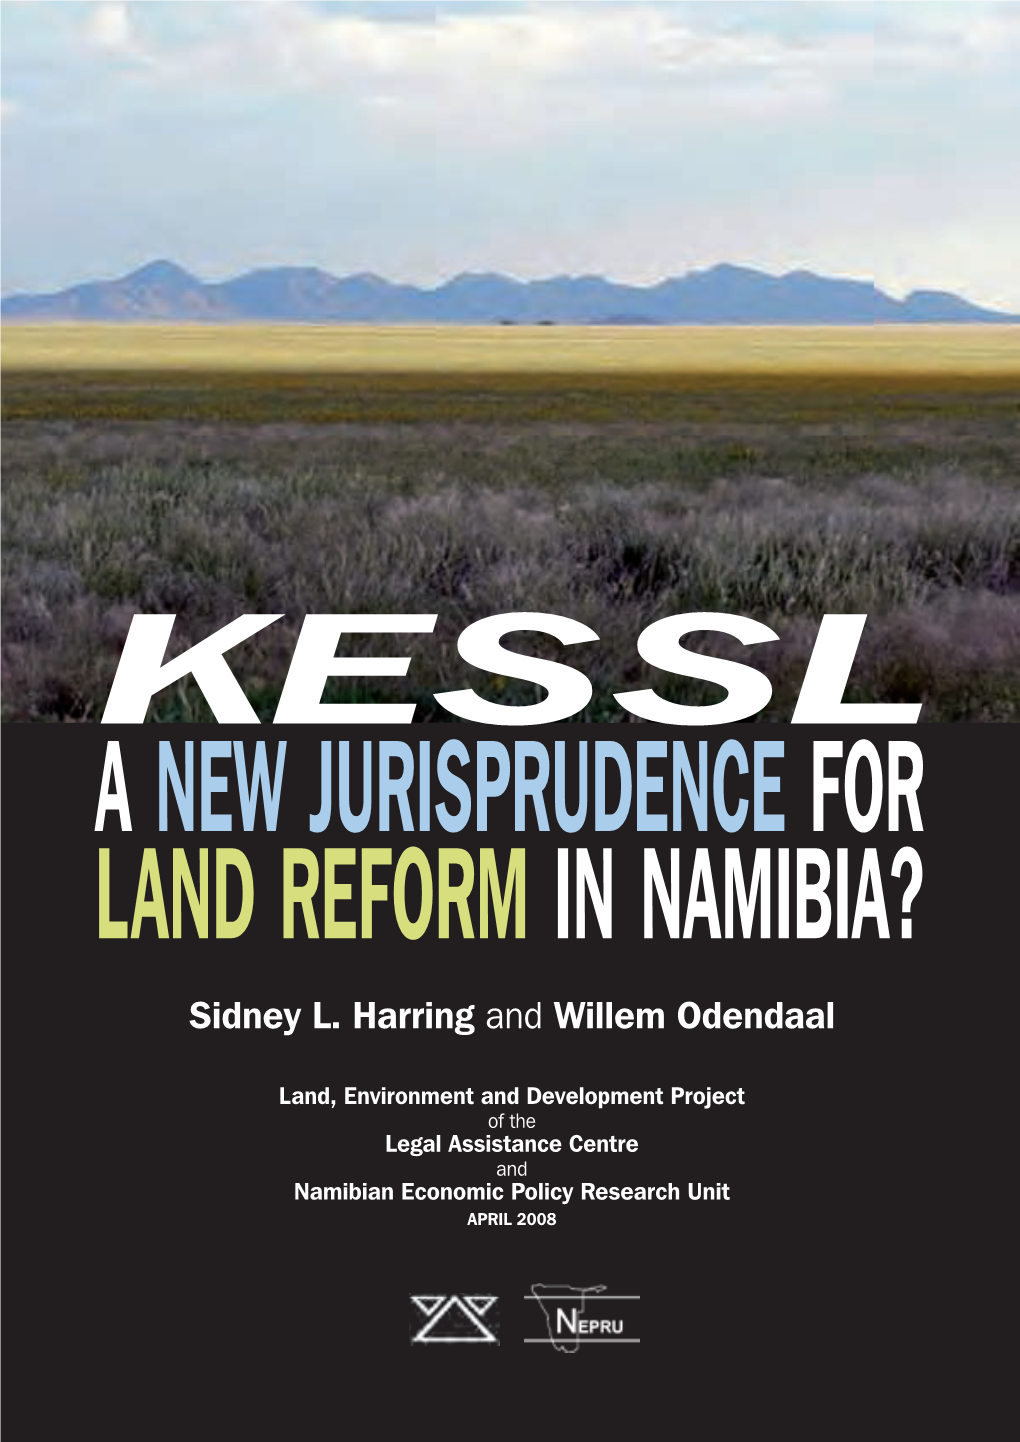 Kessl: a New Jurisprudence for Land Reform in Namibia? I